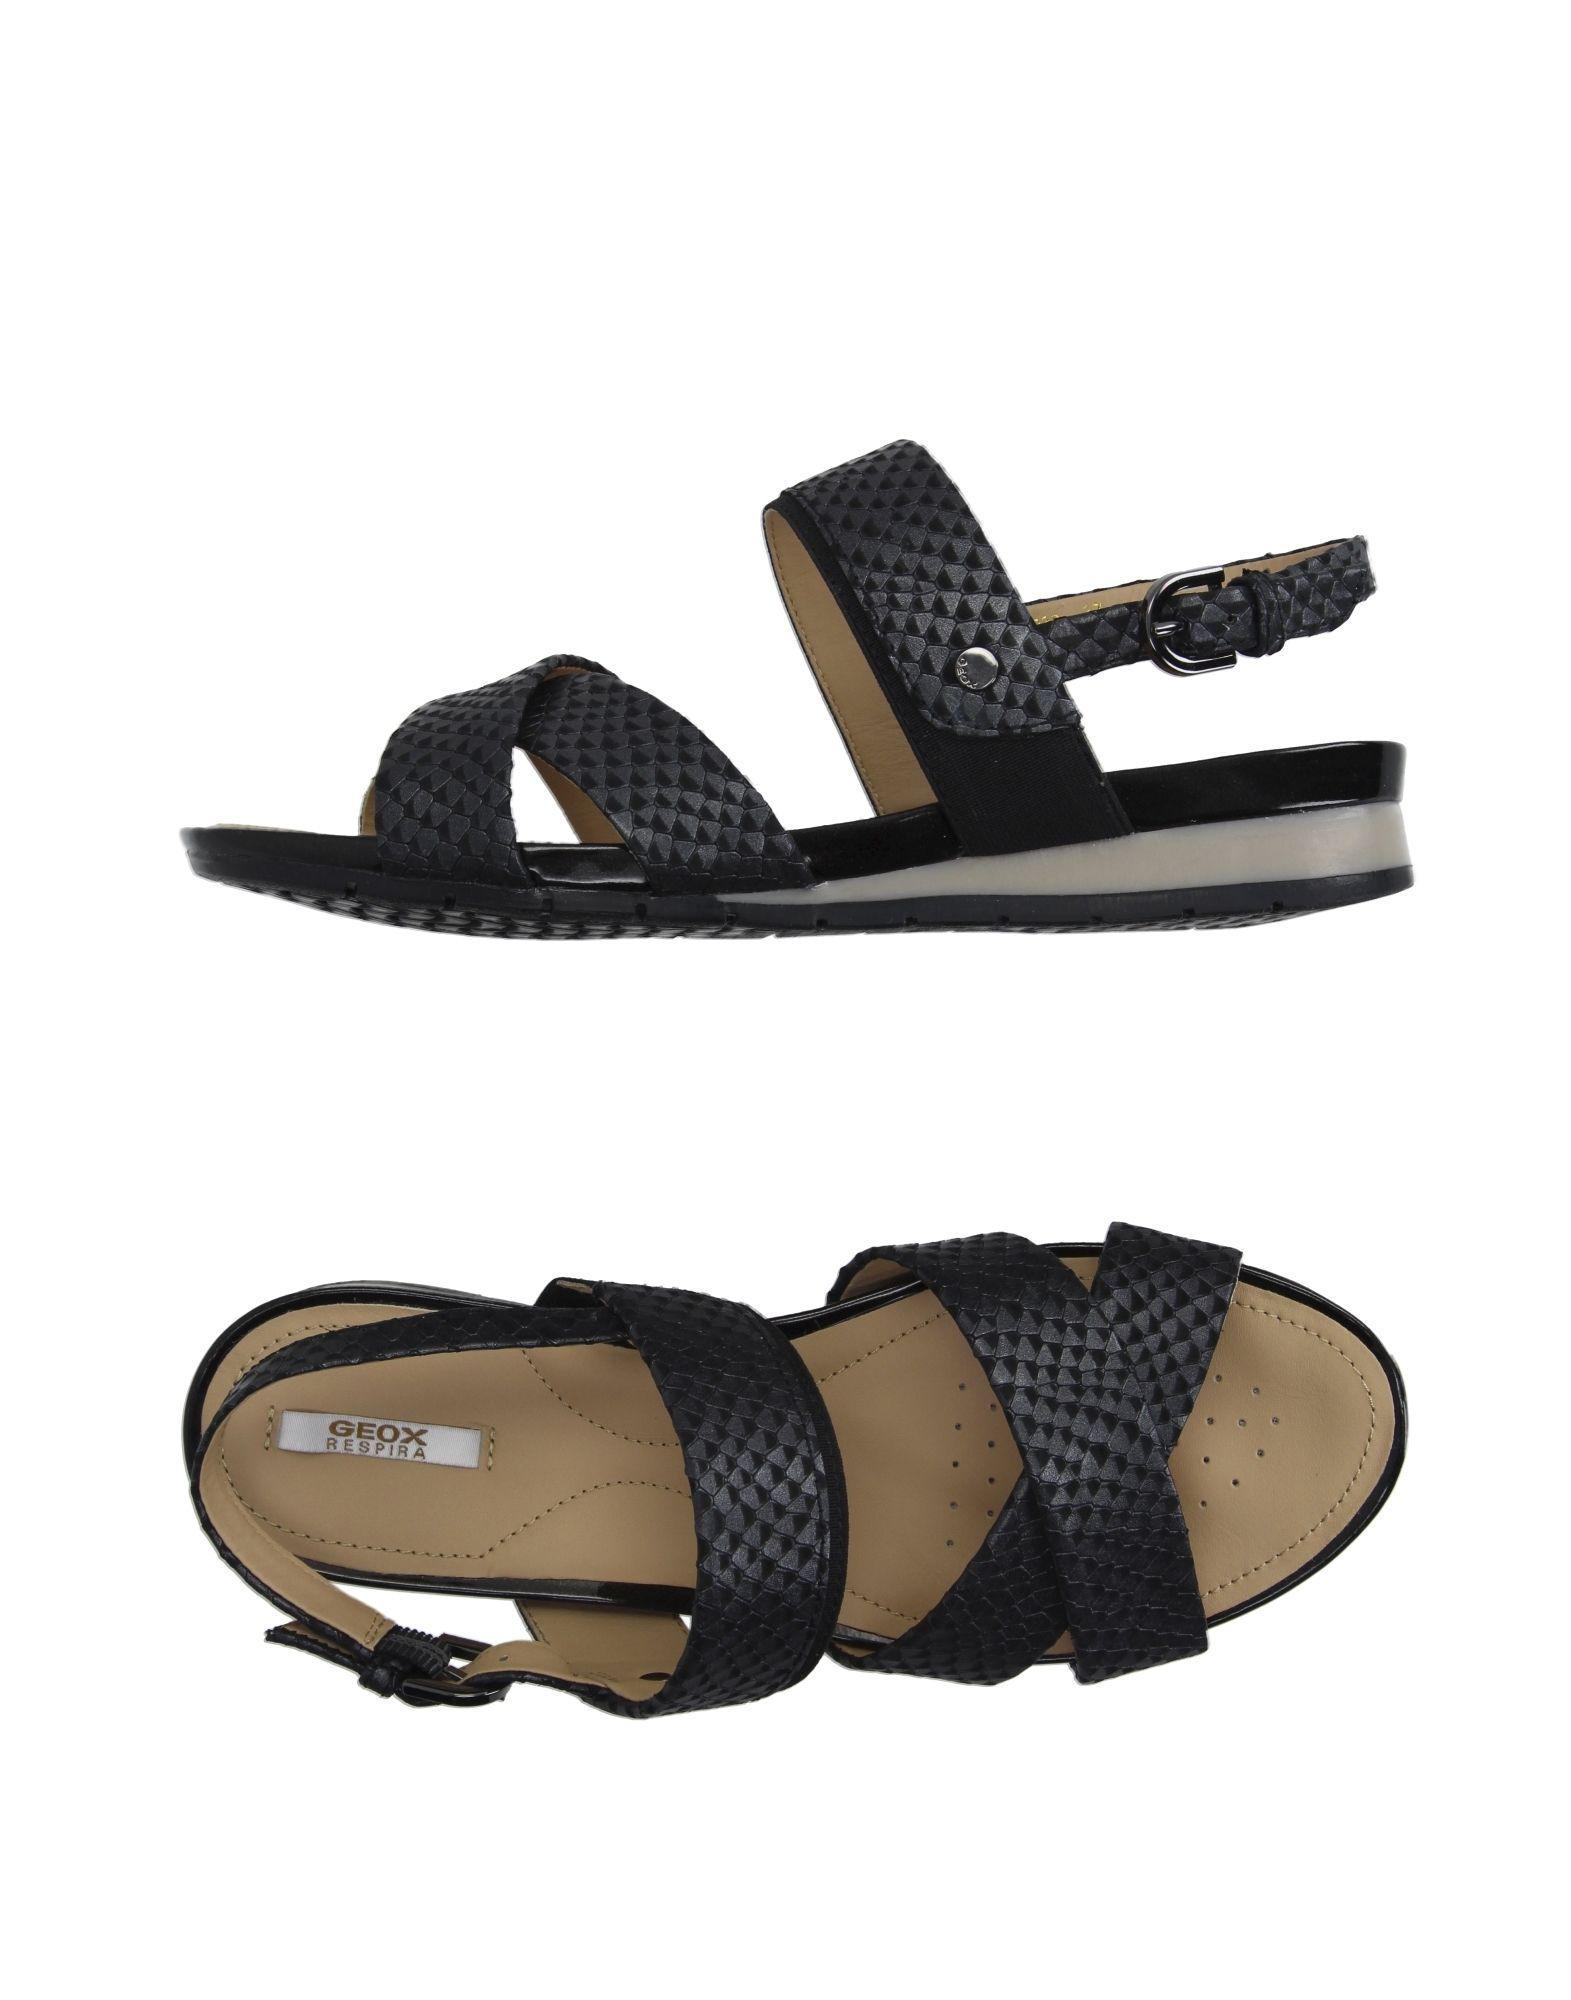 Lyst - Geox Sandals in Black